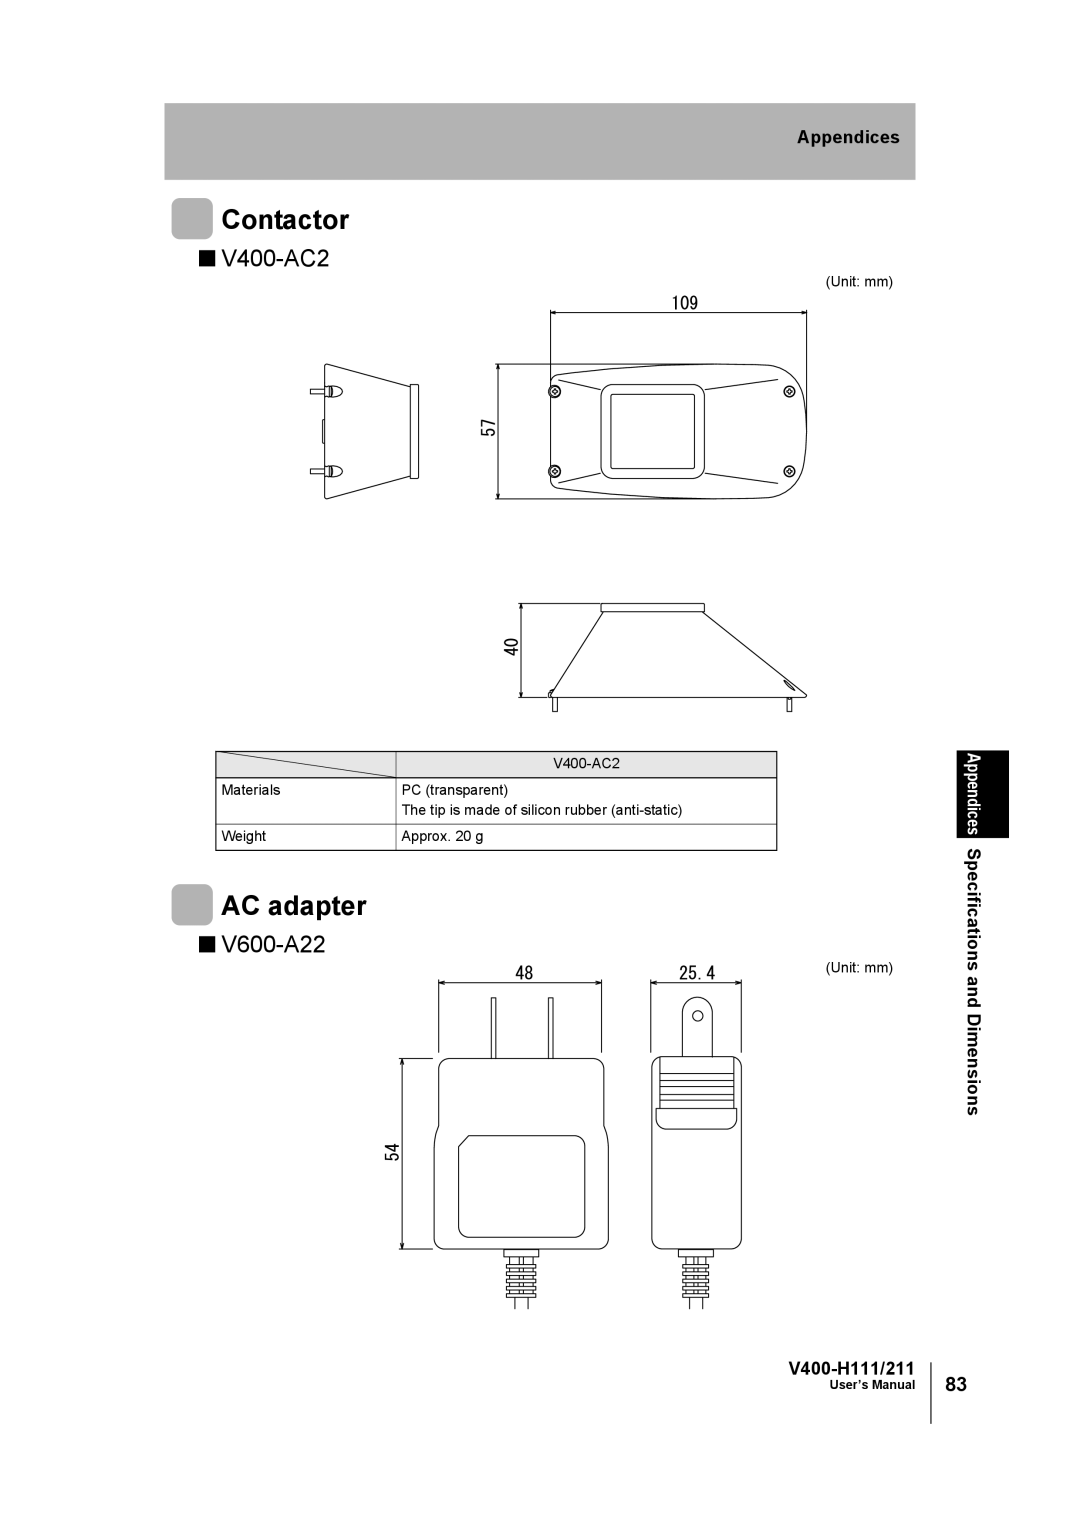 Omron V400-H111 user manual Contactor, AC adapter, V400-AC2, V600-A22 